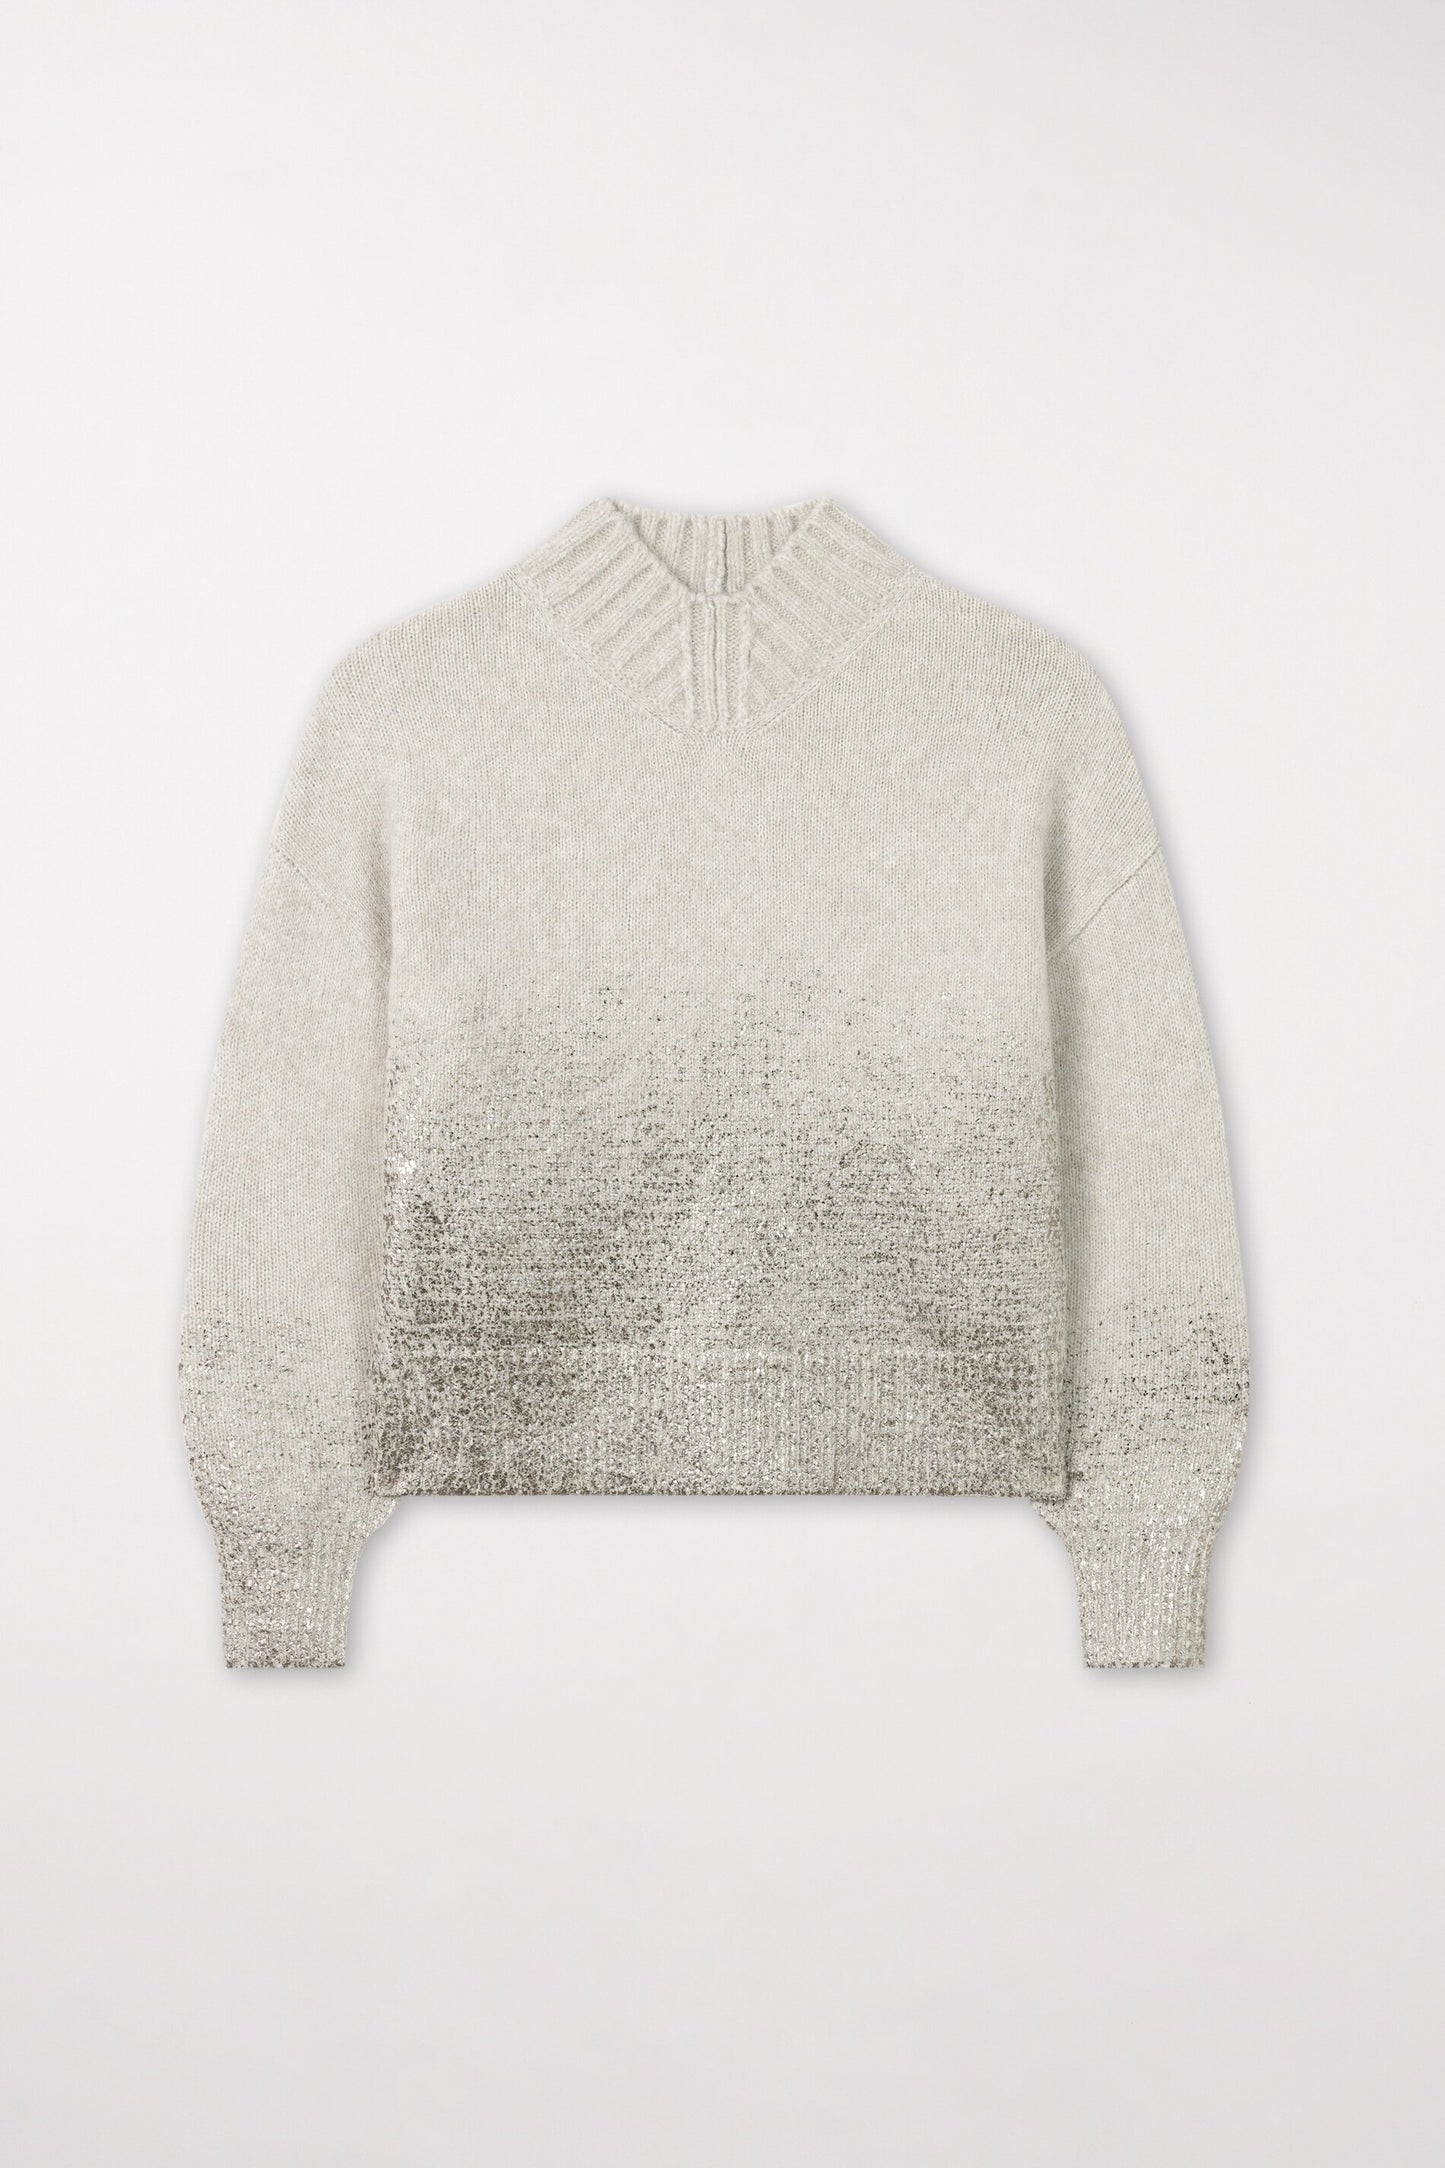 Sweater with A Metallic Print